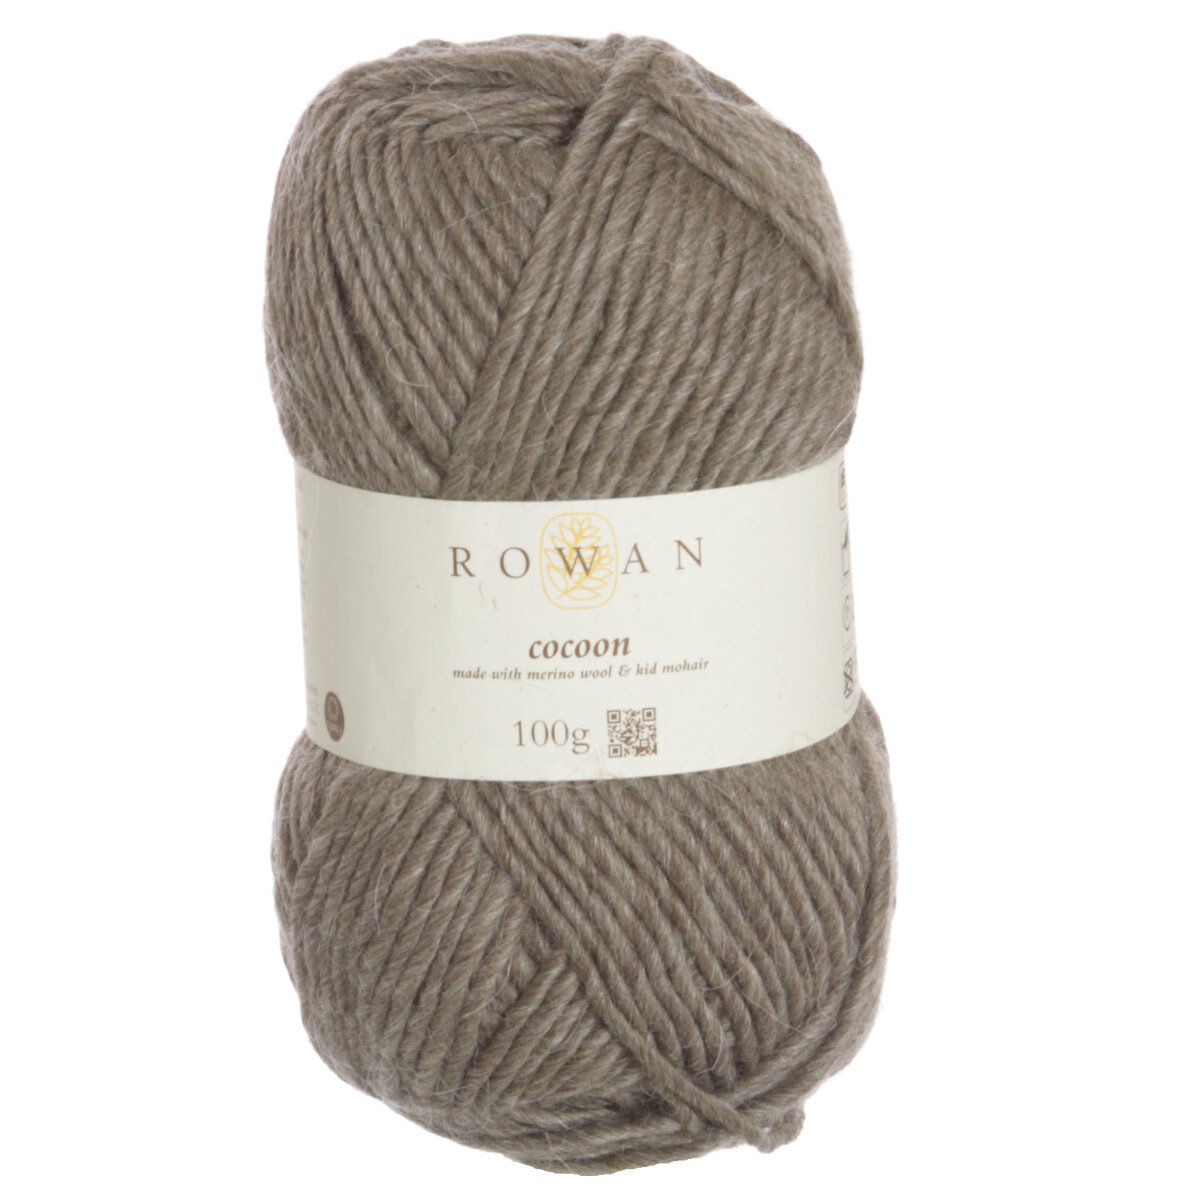 Rowan Cocoon Yarn at Jimmy Beans Wool